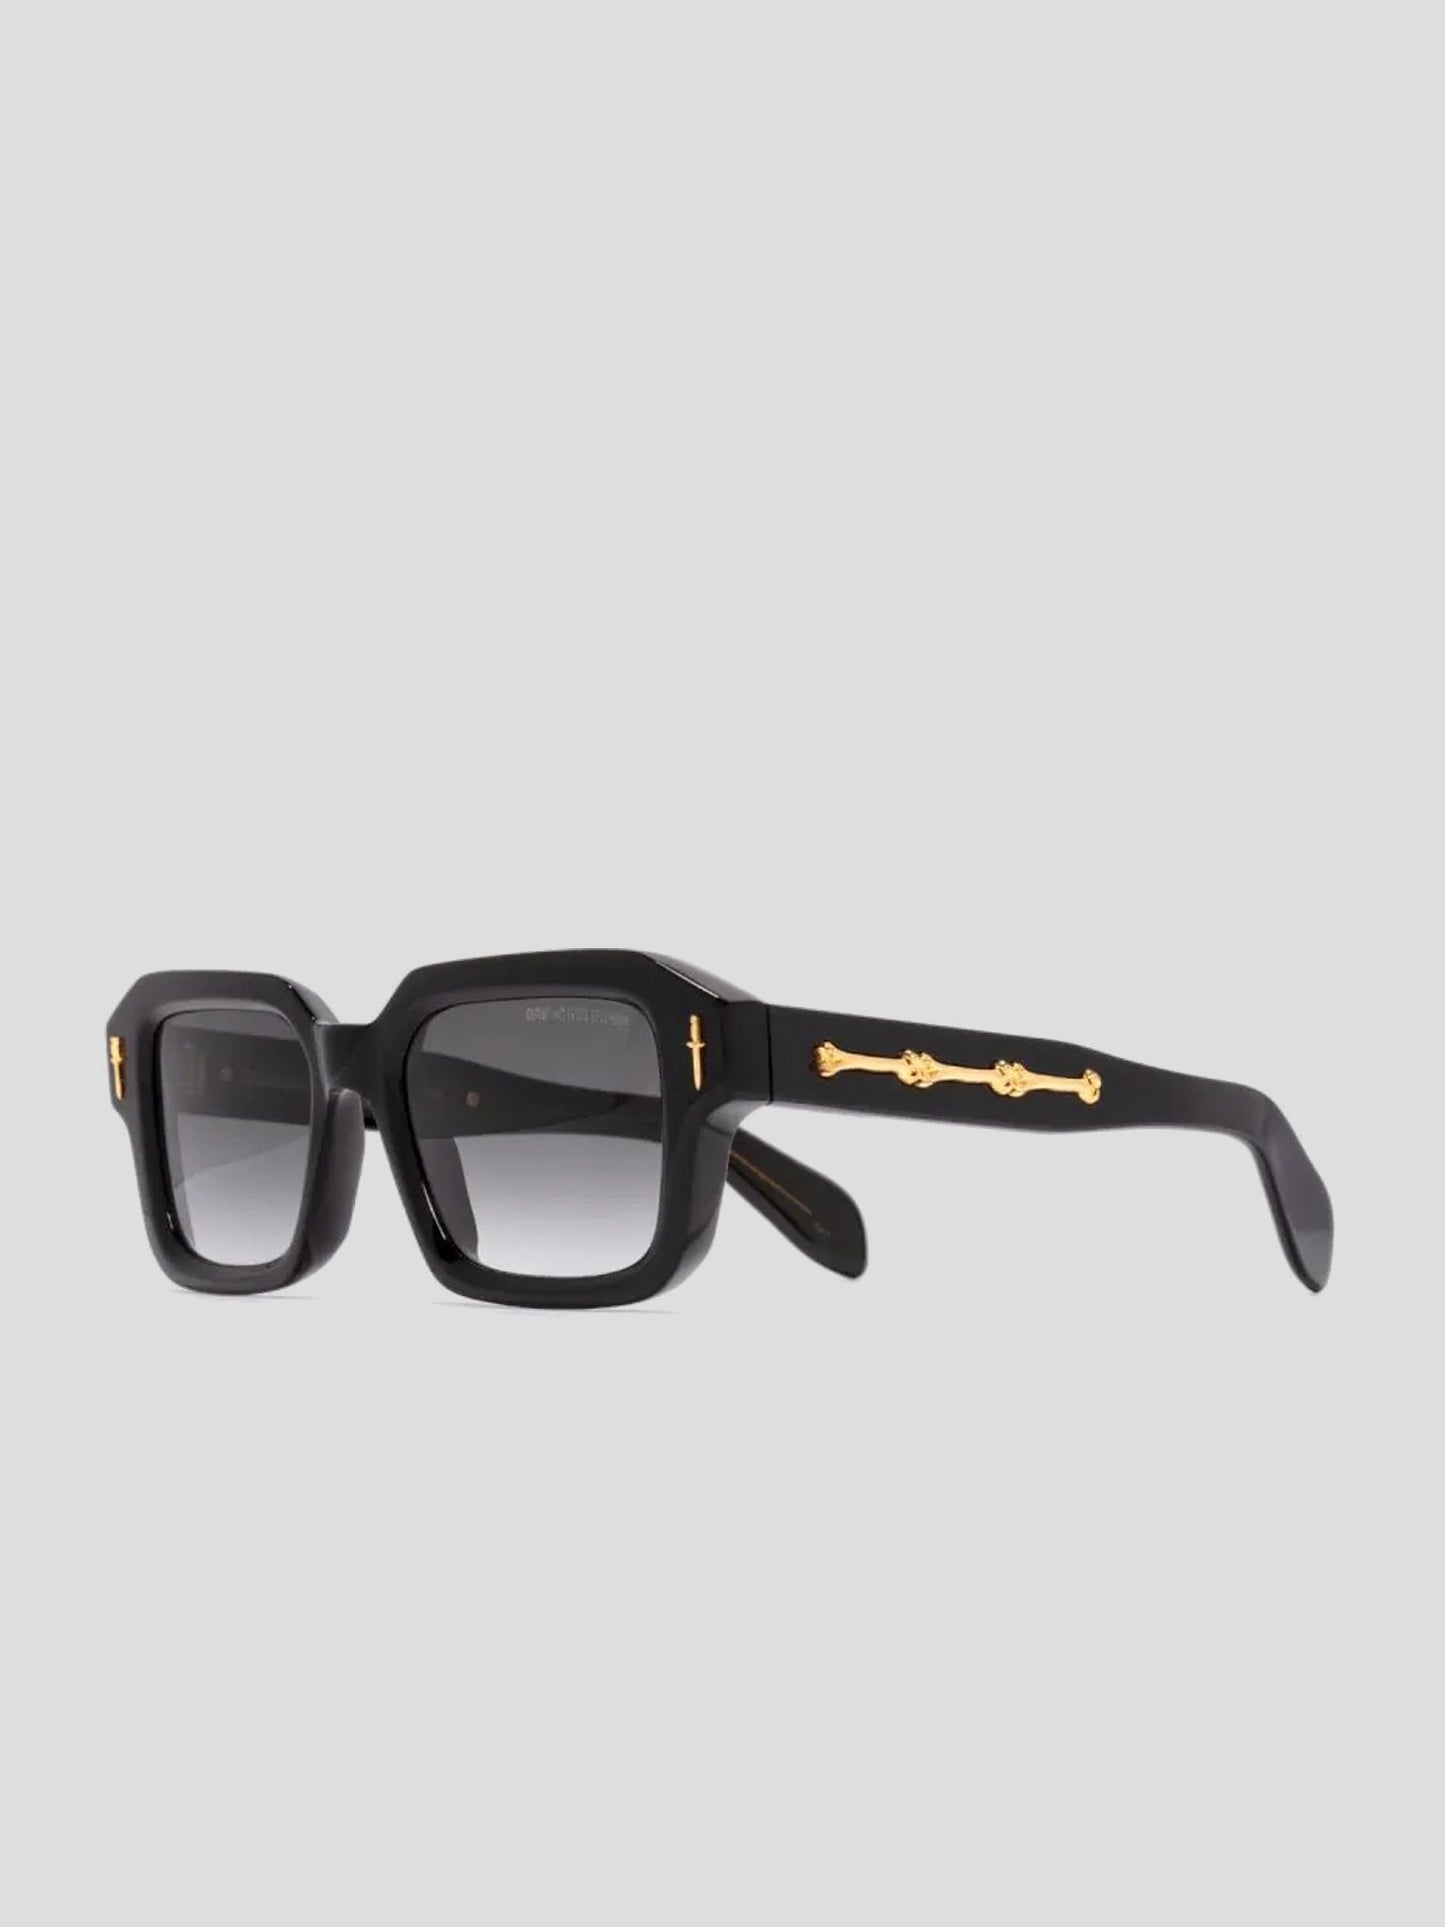 The Great Frog Frog Bones Link Limited Edition Rectangle Sunglasses, Black Gold